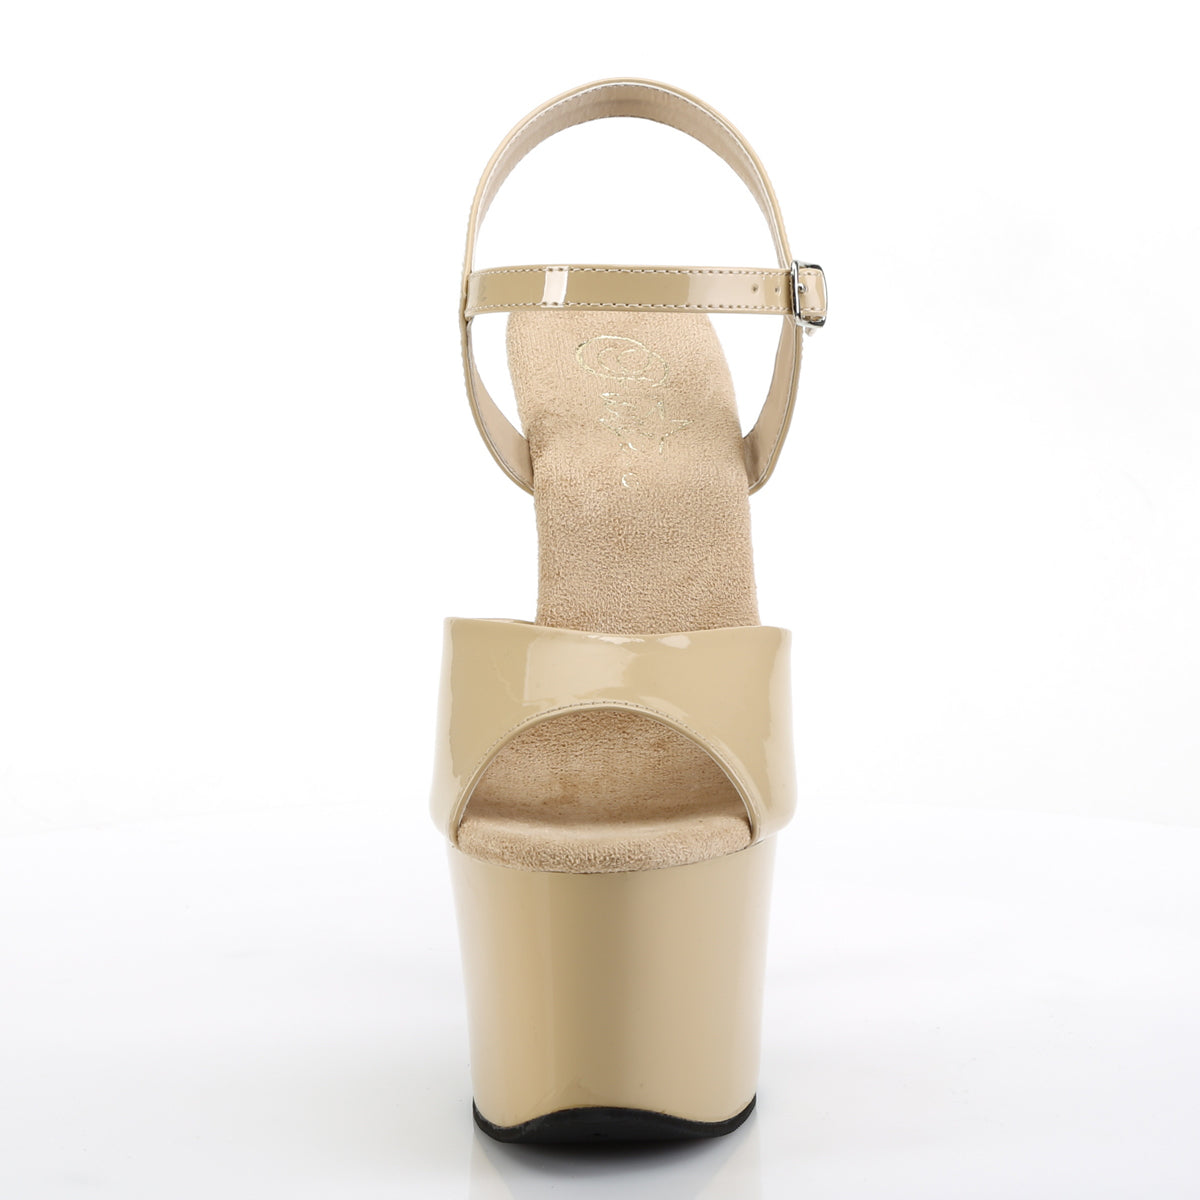 SKY-309 Pleaser 7" Heel Cream Patent Pole Dancing Platforms-Pleaser- Sexy Shoes Alternative Footwear